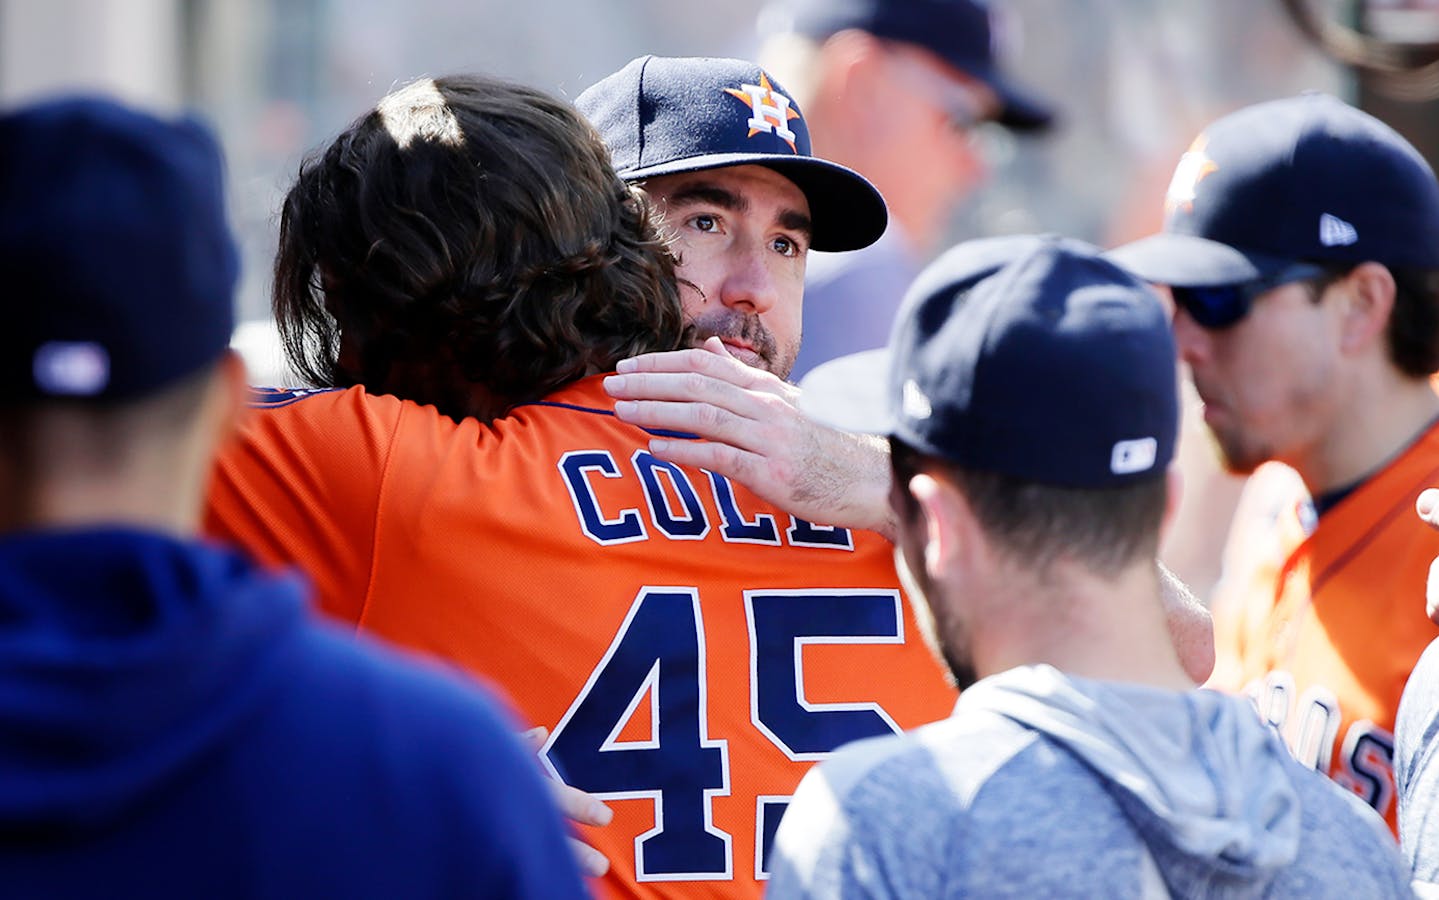 Yankee backs Astros: Gerrit Cole says Houston 'played fair and